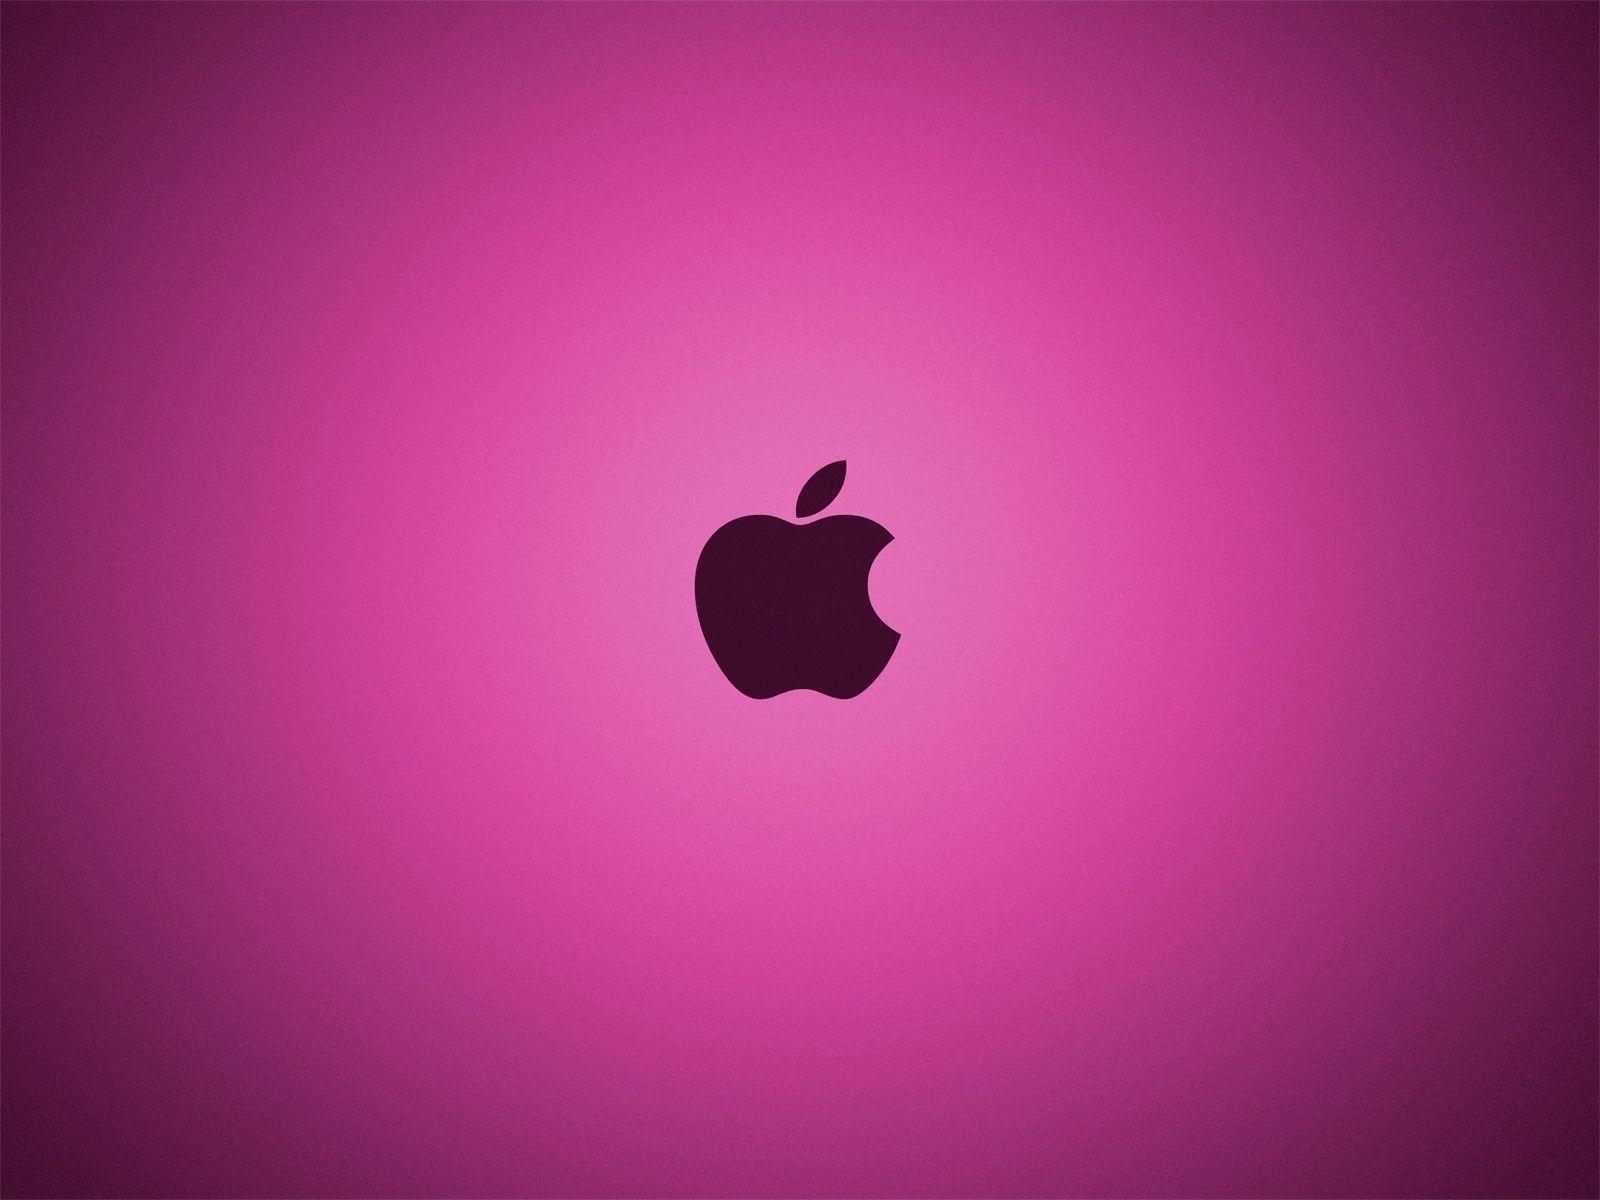 Cool iPhone 4 Apple Logo image. iPad Wallpaper!